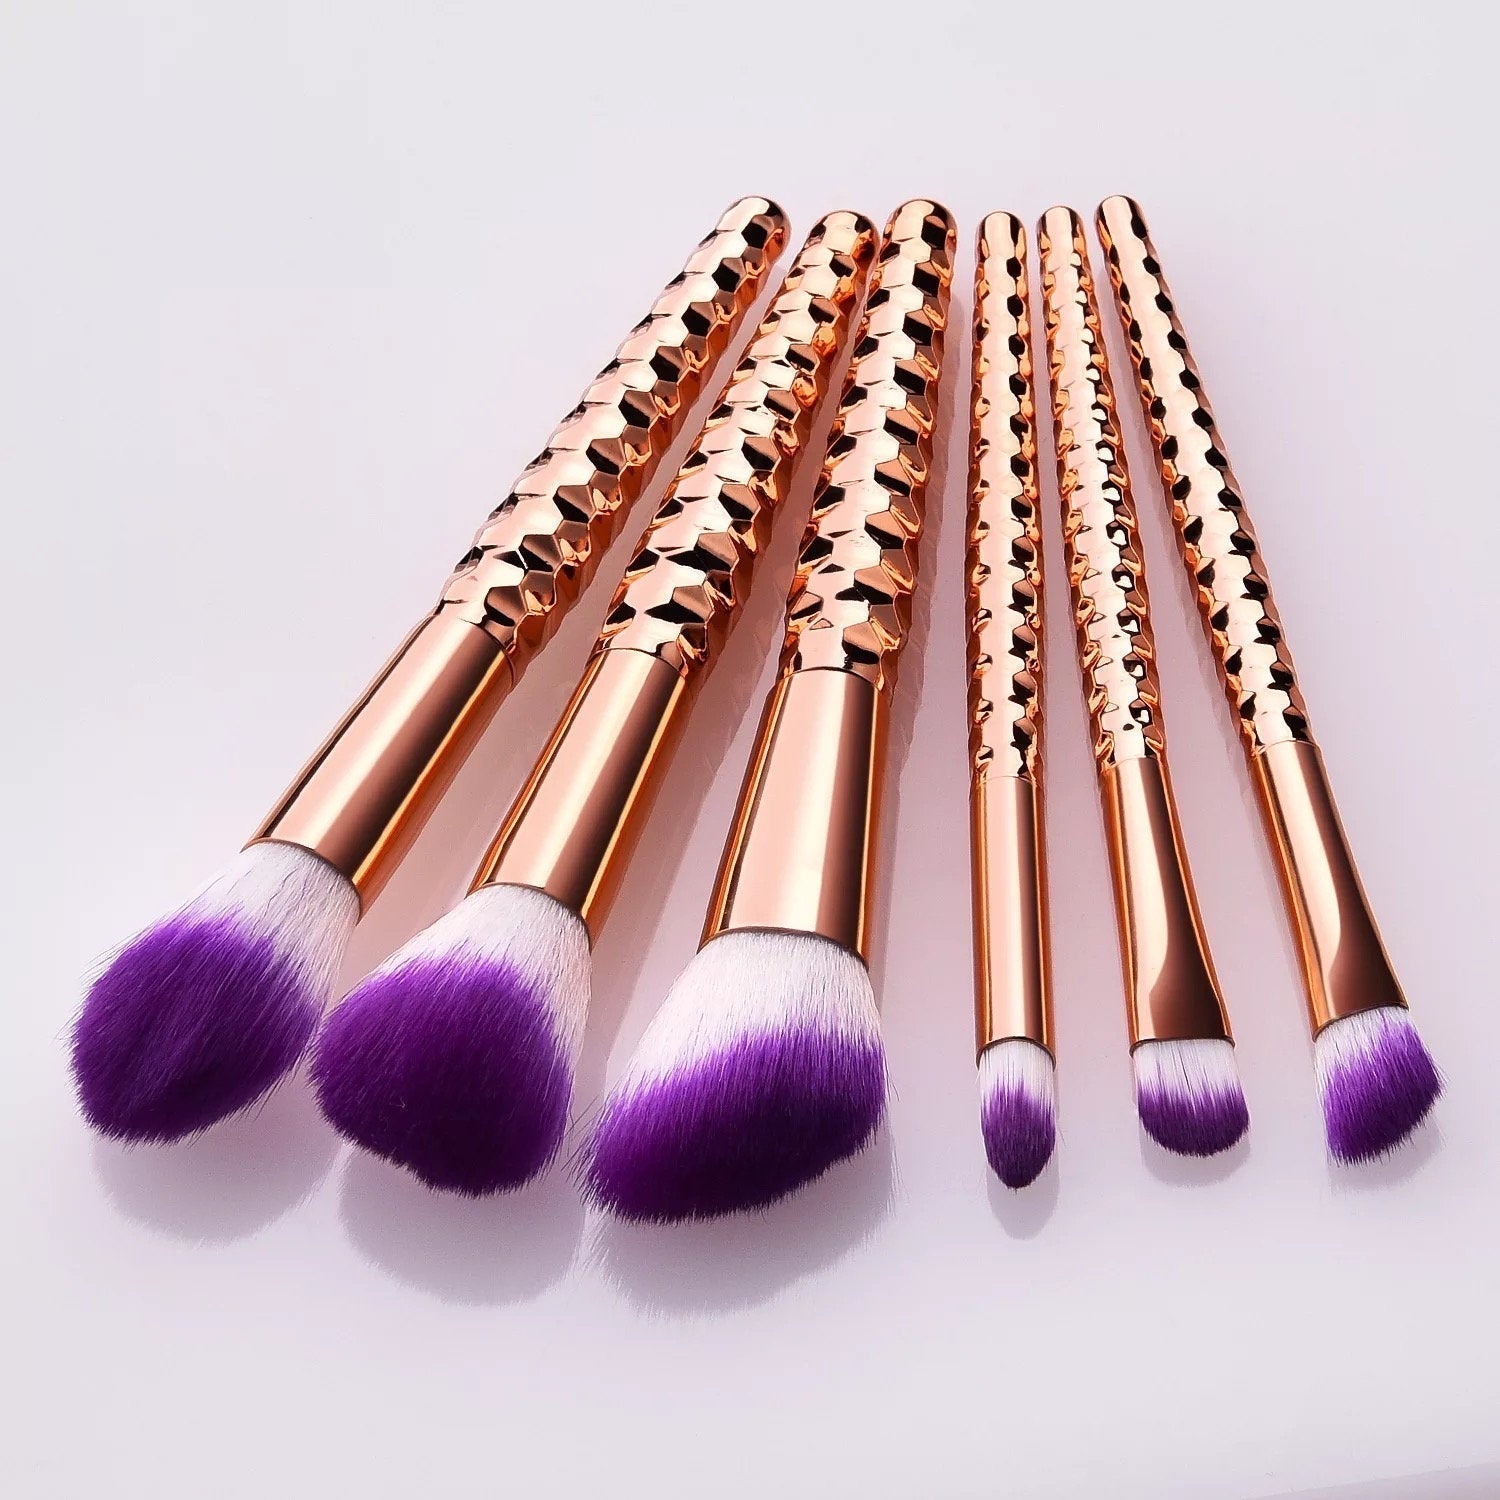 Kaleidoscopic Chiseled Makeup Brush Set Makeup Brushes Pink Sweetheart